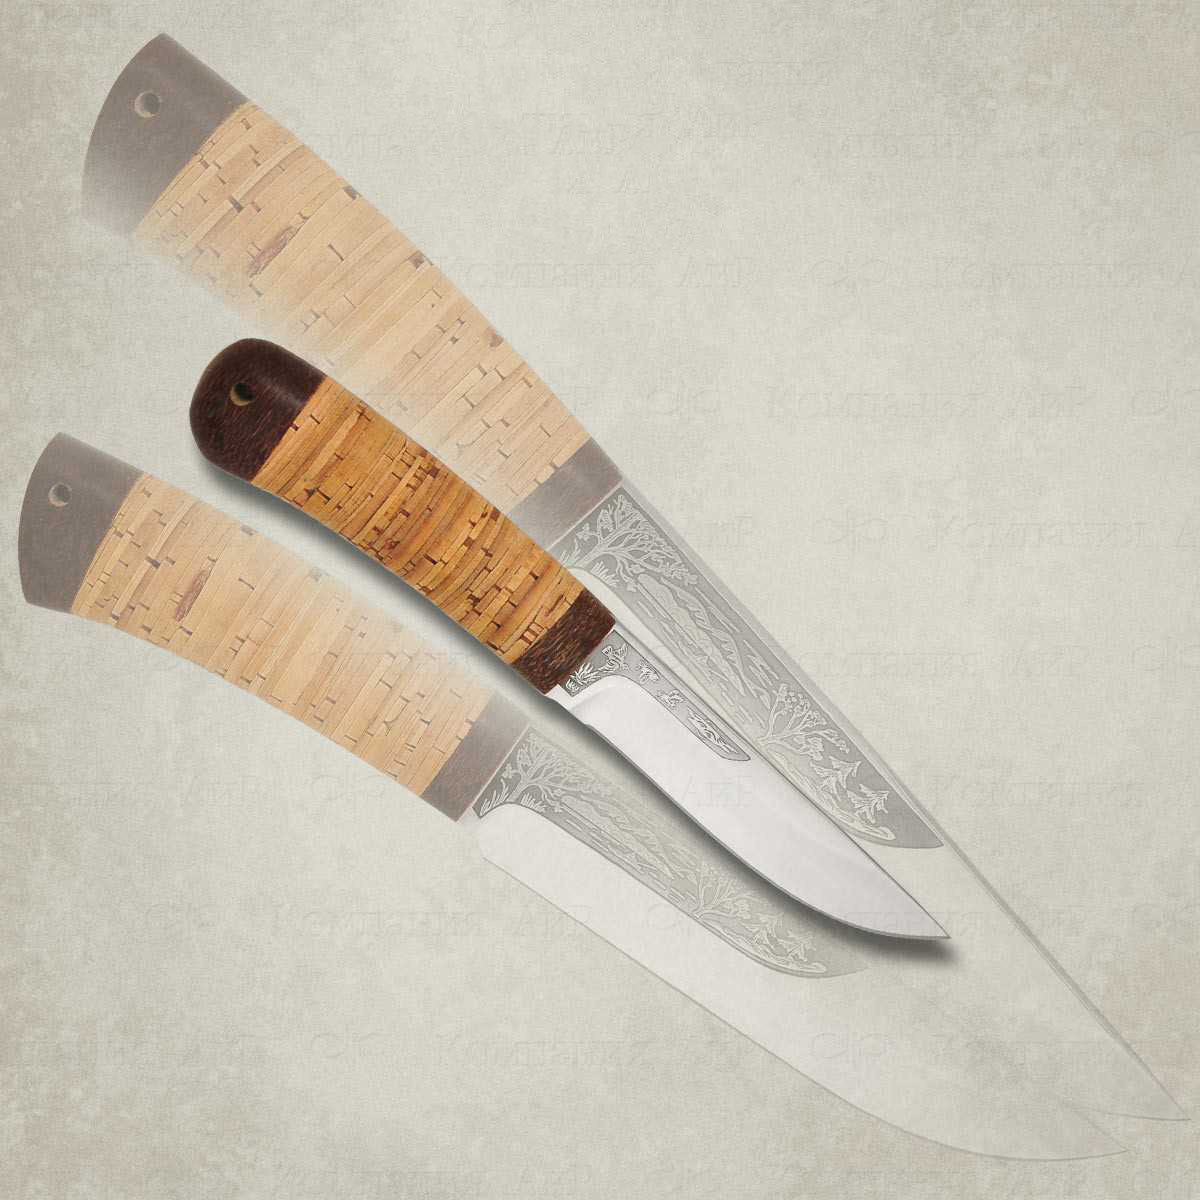 Нож Шашлычный малый, АиР, береста, 95х18 разделочный малый нож mallony